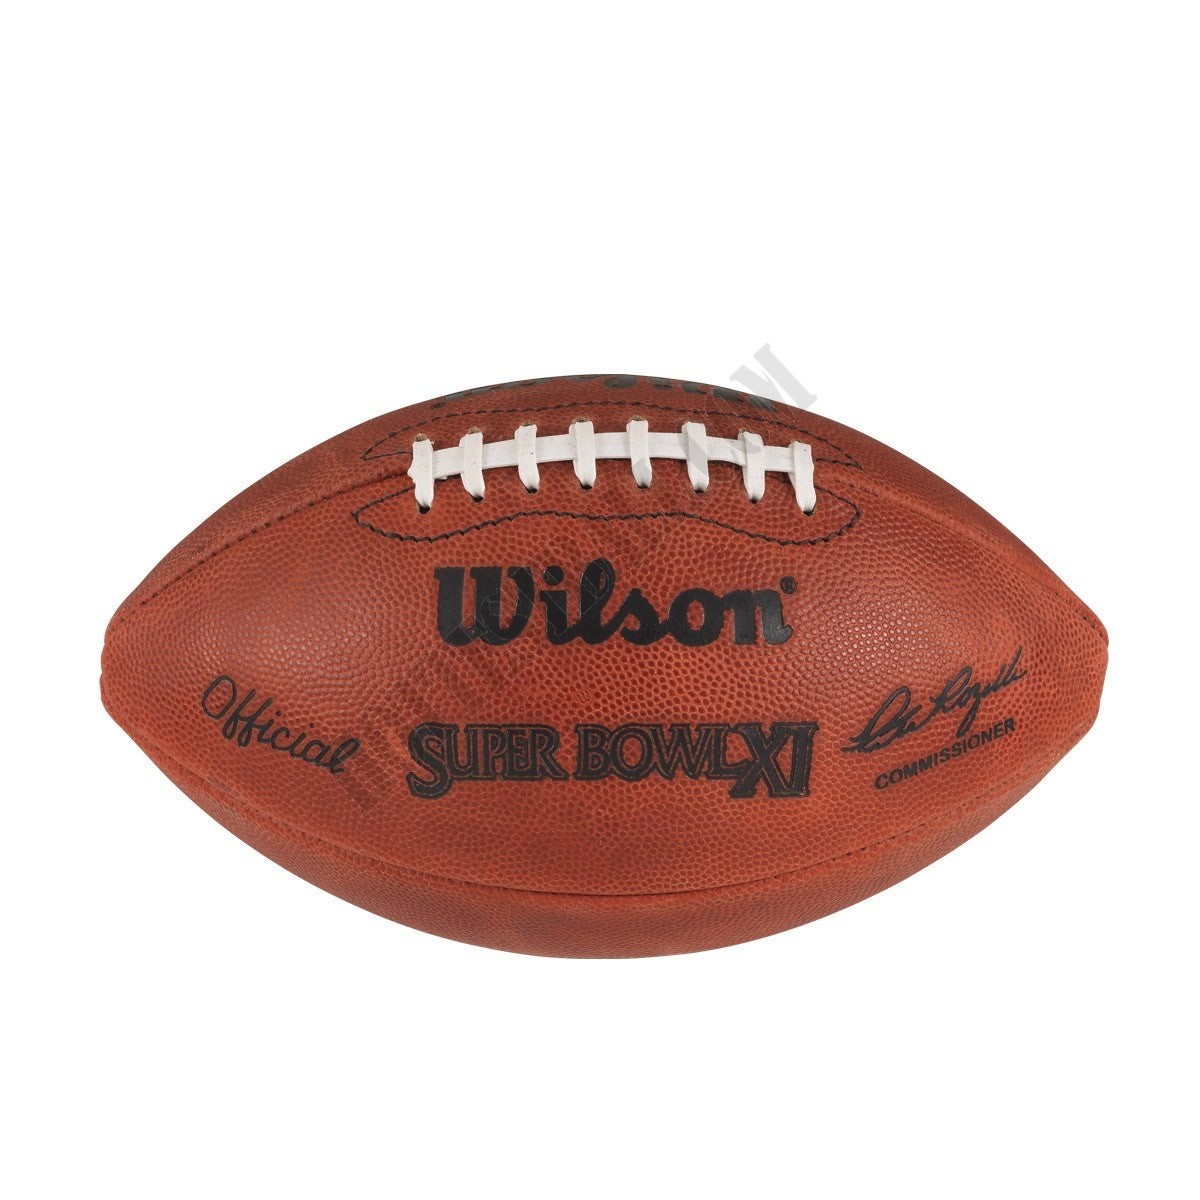 Super Bowl XI Game Football - Oakland Raiders ● Wilson Promotions - Super Bowl XI Game Football - Oakland Raiders ● Wilson Promotions